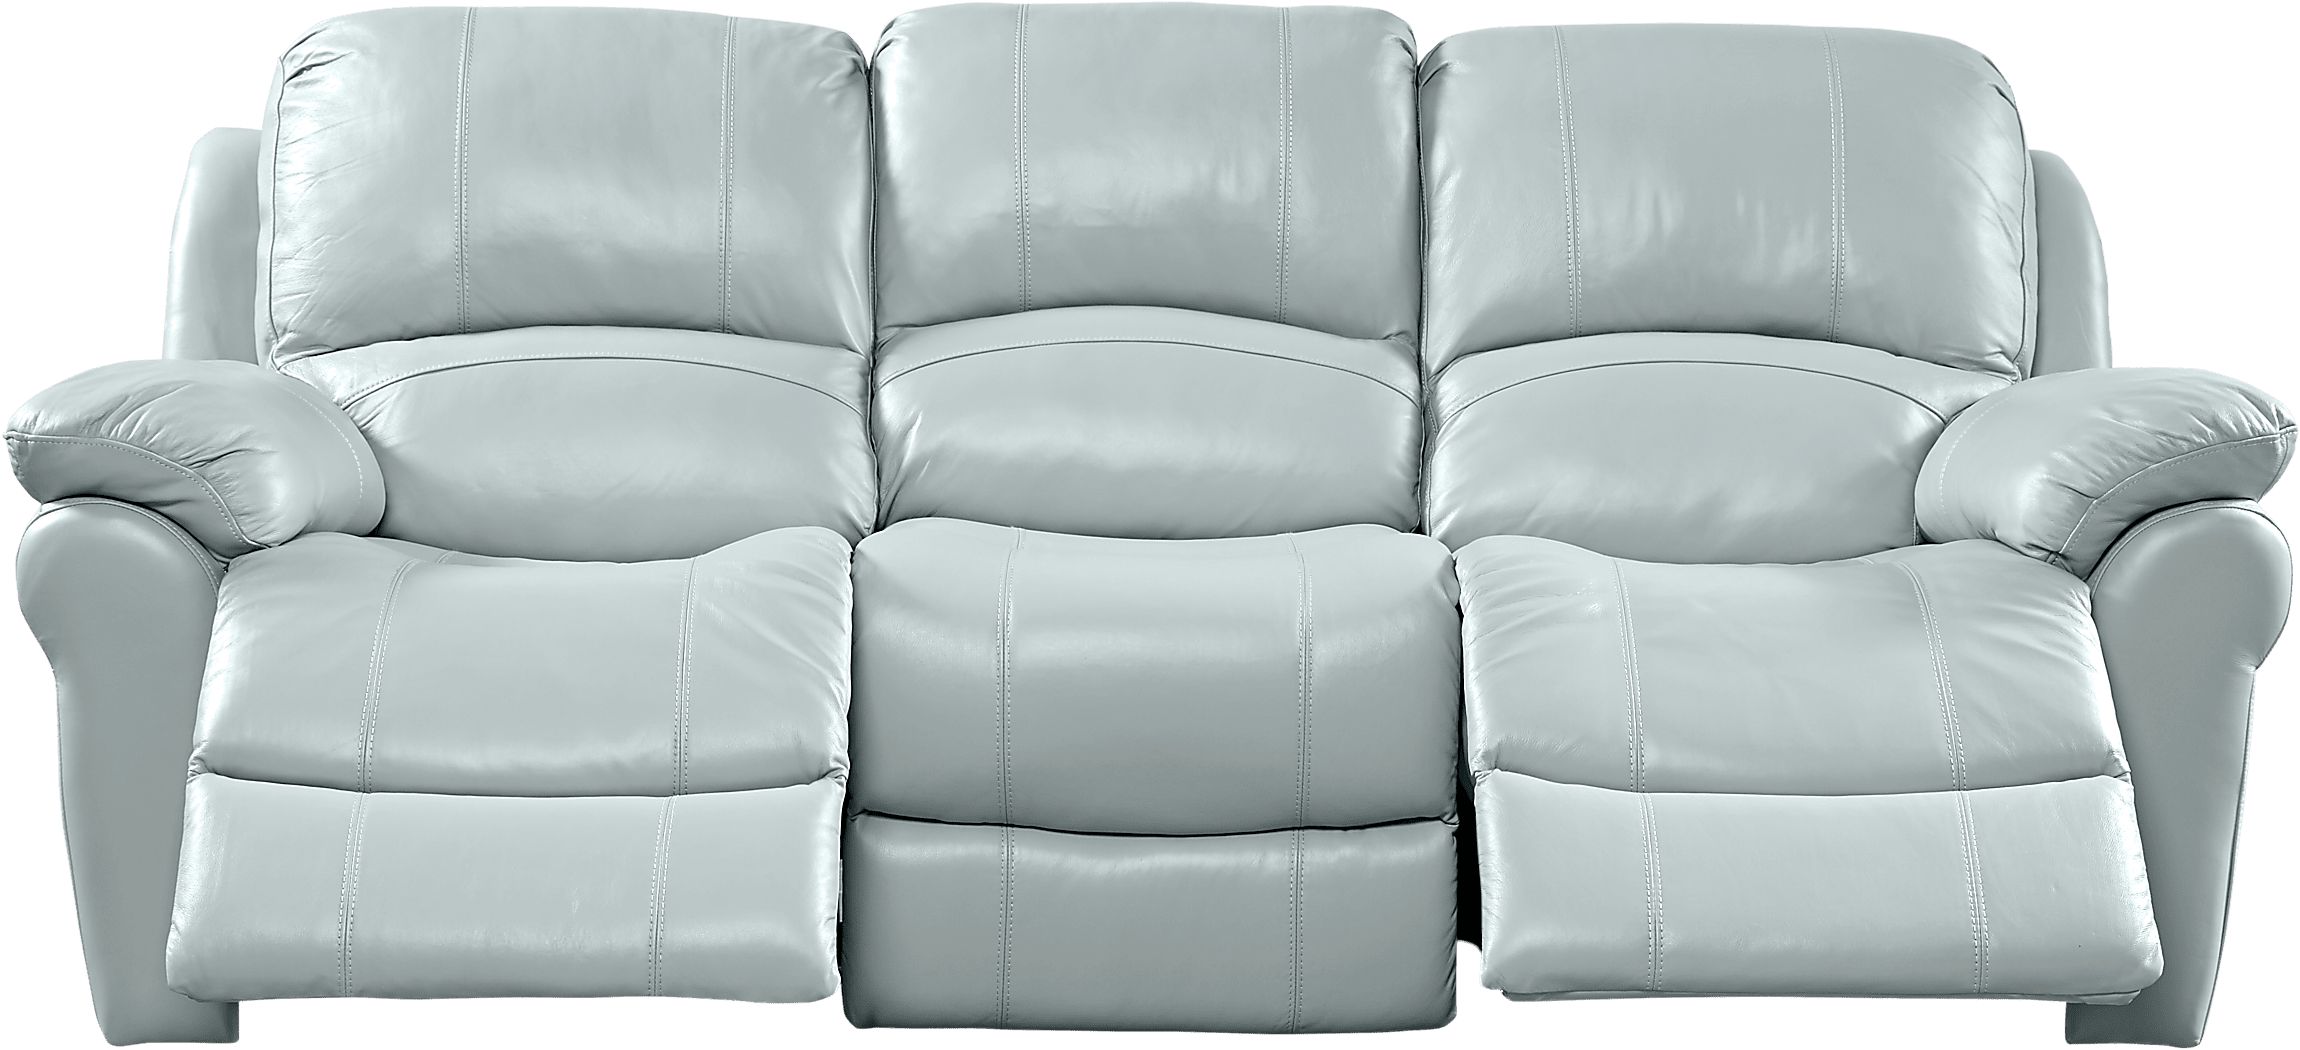 Vercelli Aqua Leather 7 Pc Power Reclining Living Room